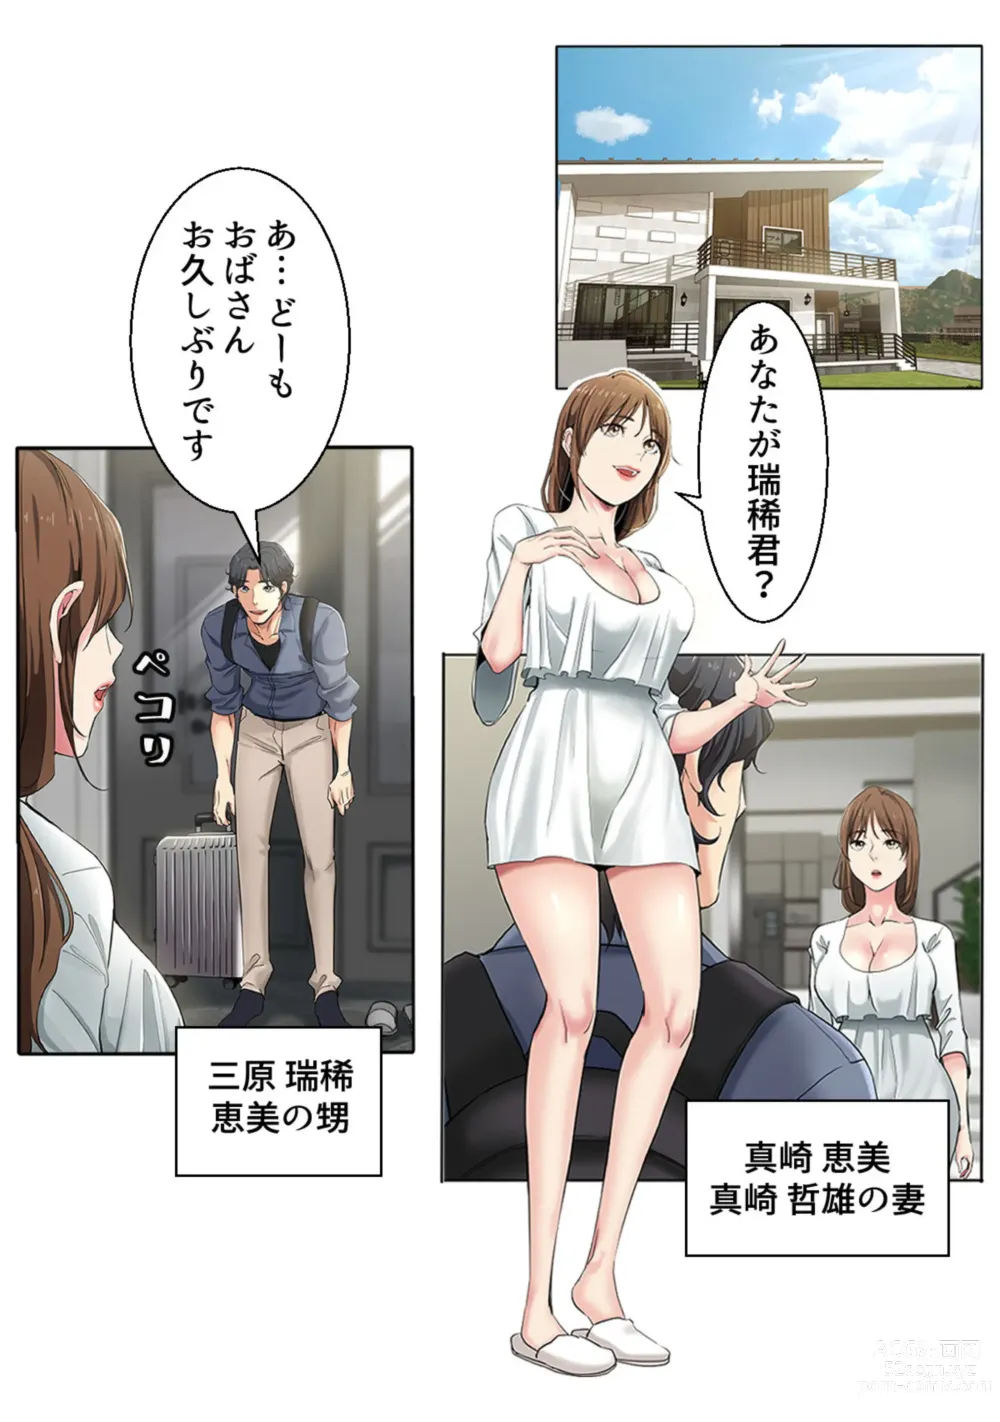 Page 2 of manga Ikemen Oikko to Miwaku no Yoga Ressun 1